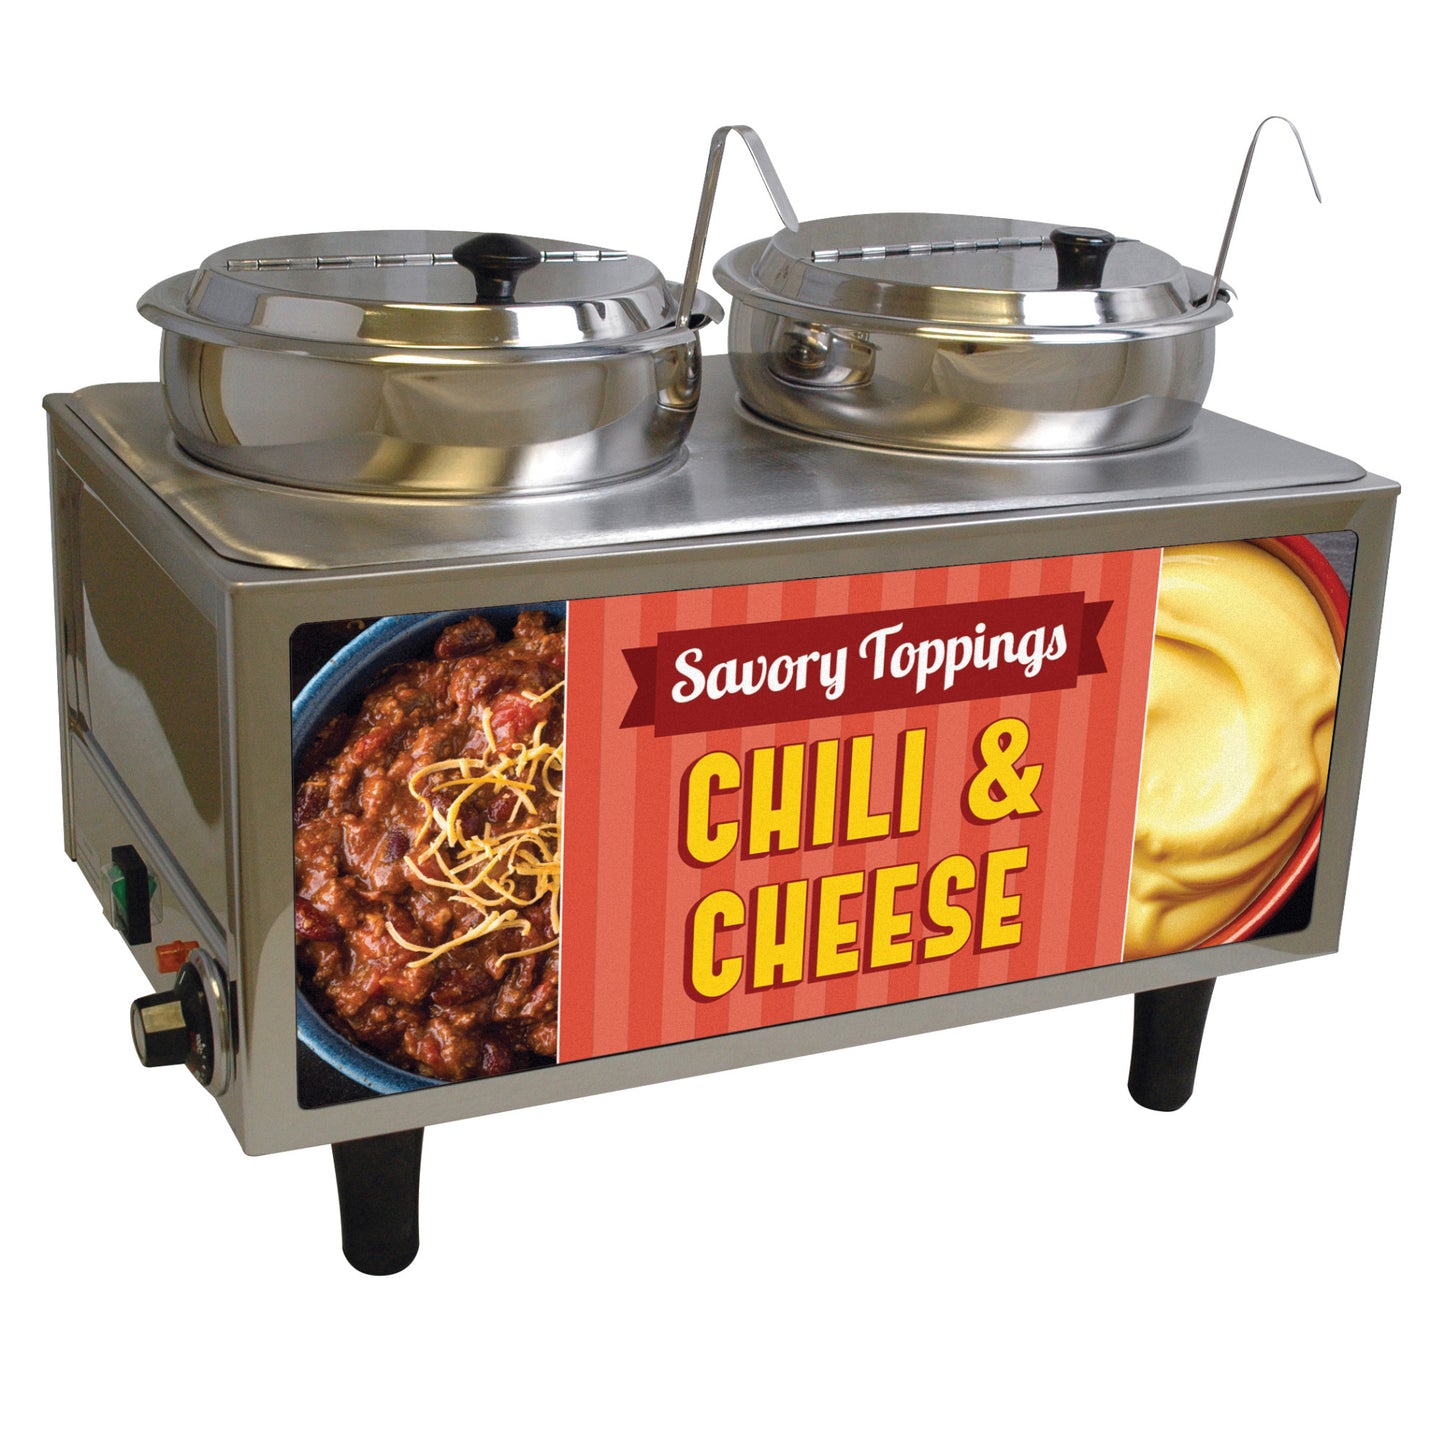 51072A - BenchmarkUSA "Chili & Cheese" Food Warmer - 2 Ladles, 2 Lids